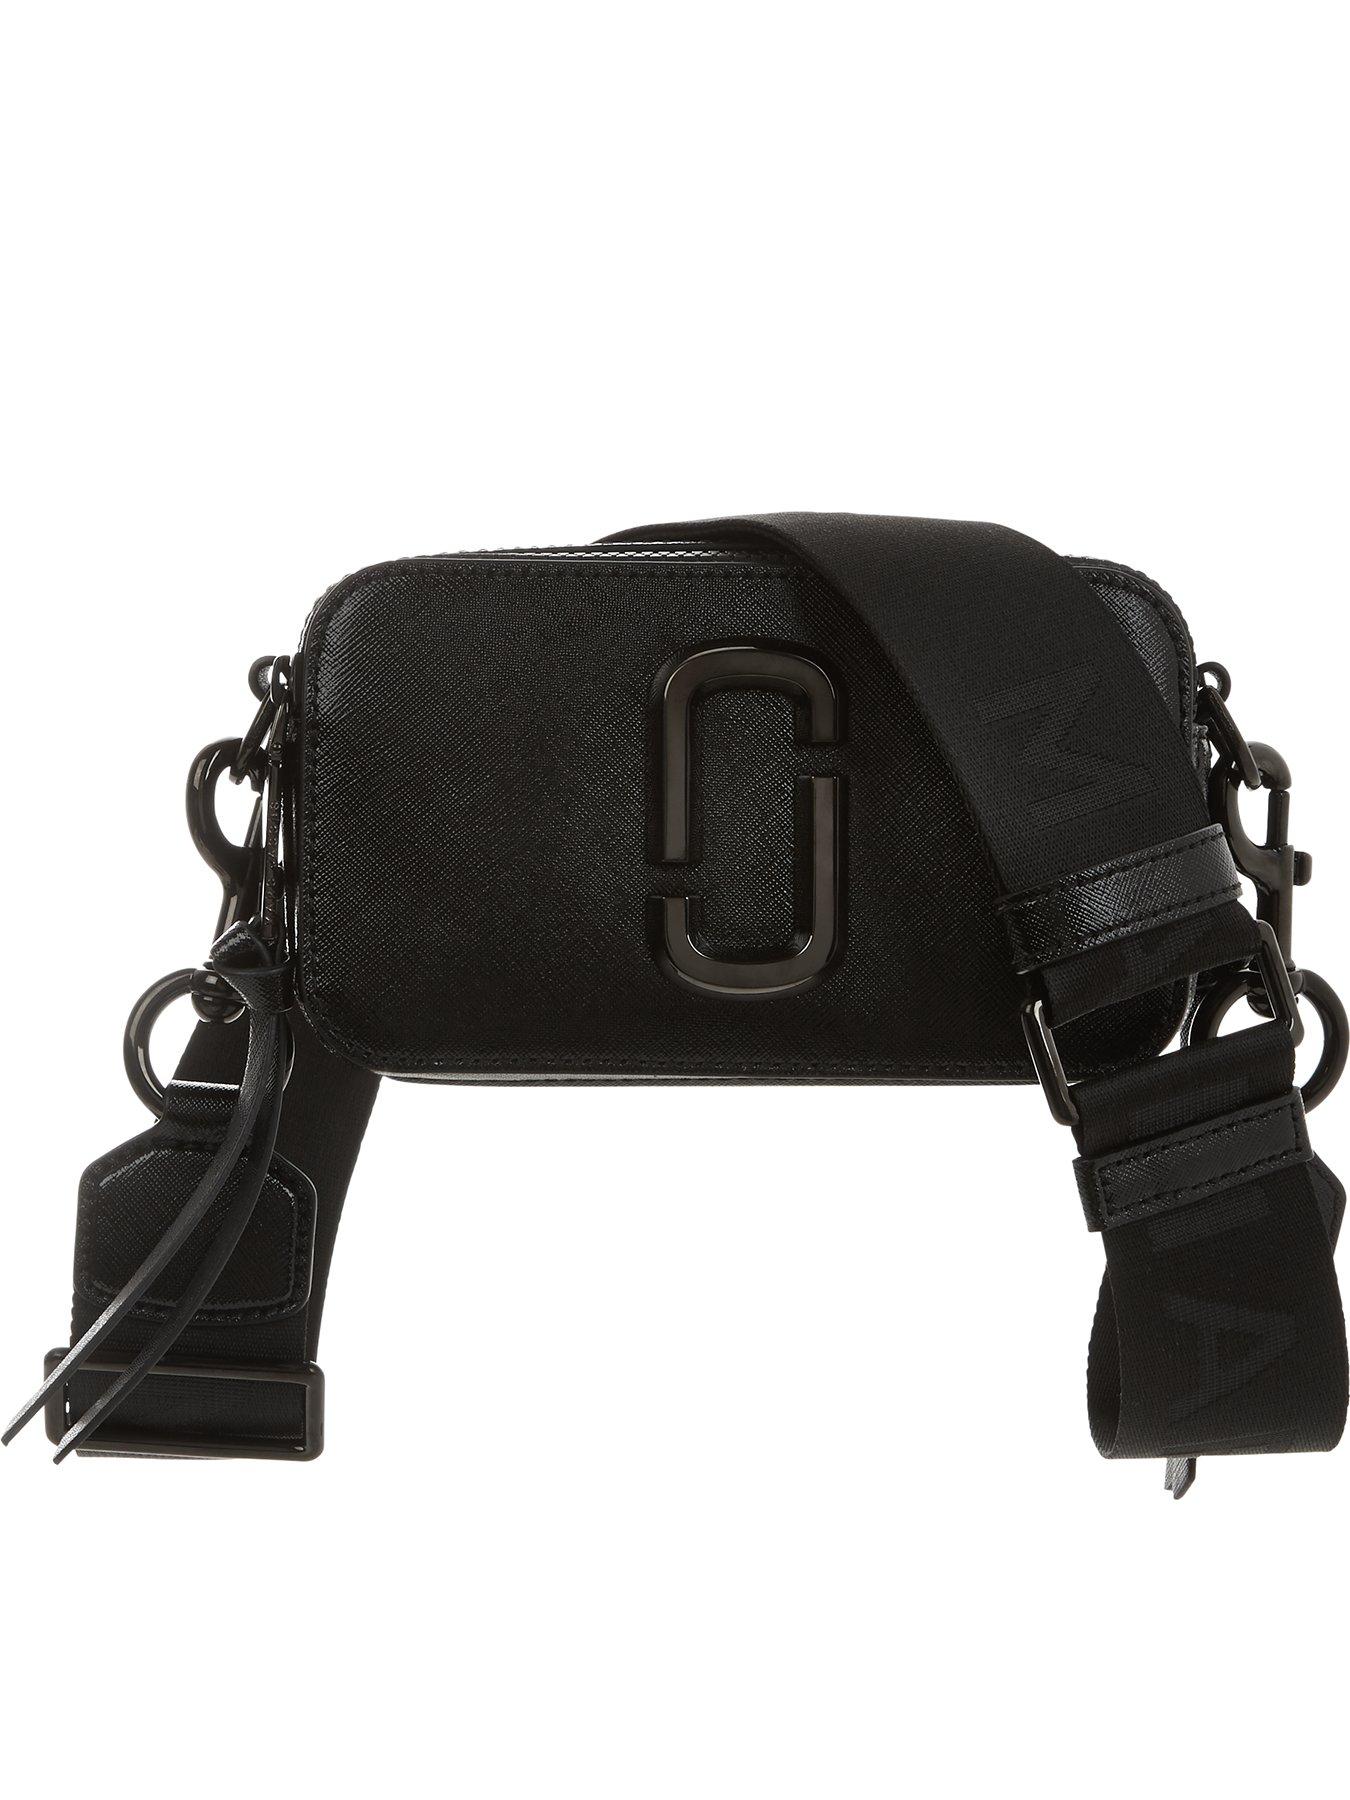 Marc Jacobs Black 'The Snapshot' Bag